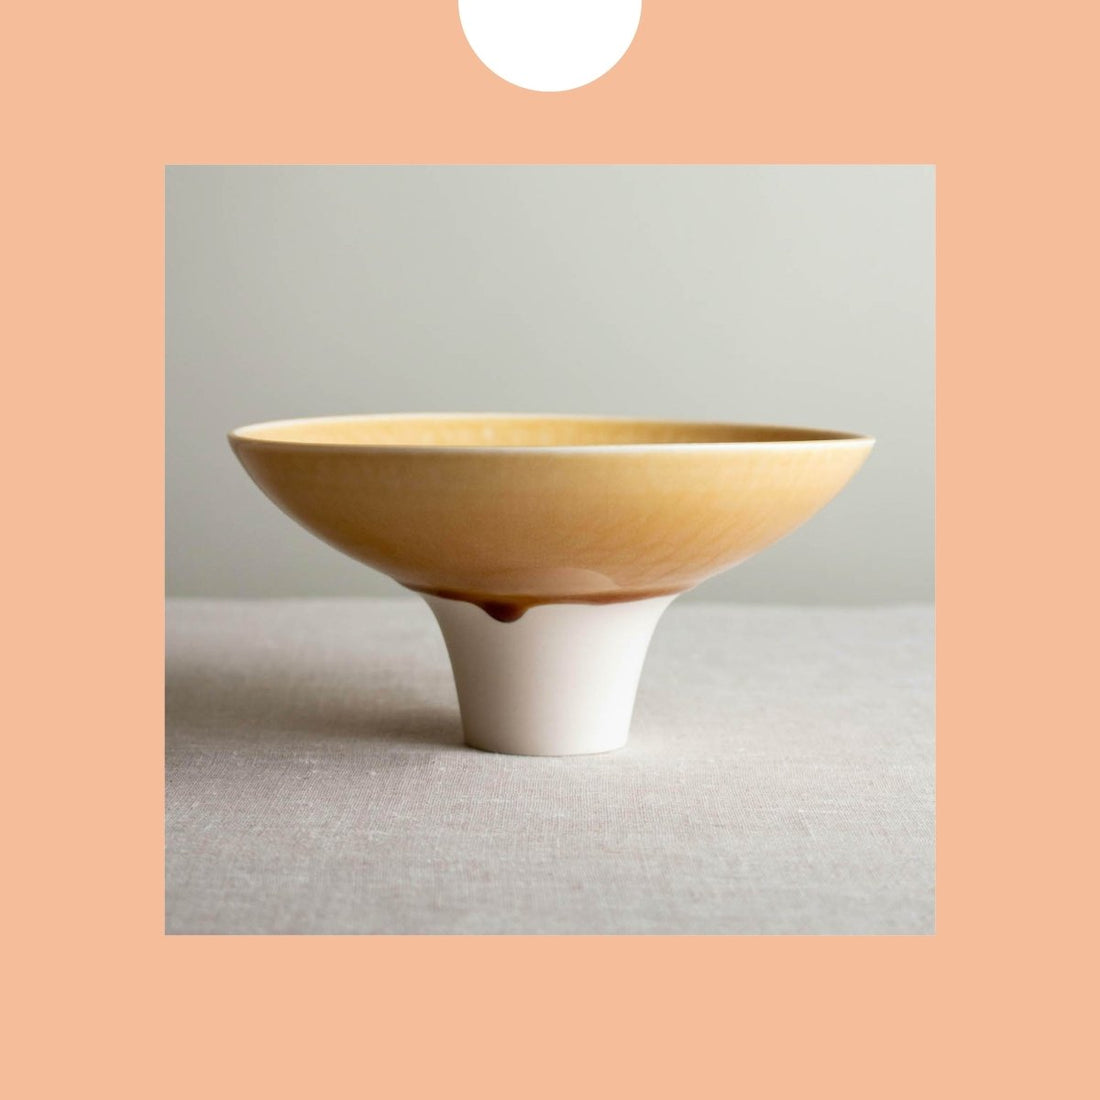  Lisa Fleming Ceramics - American Craft Council